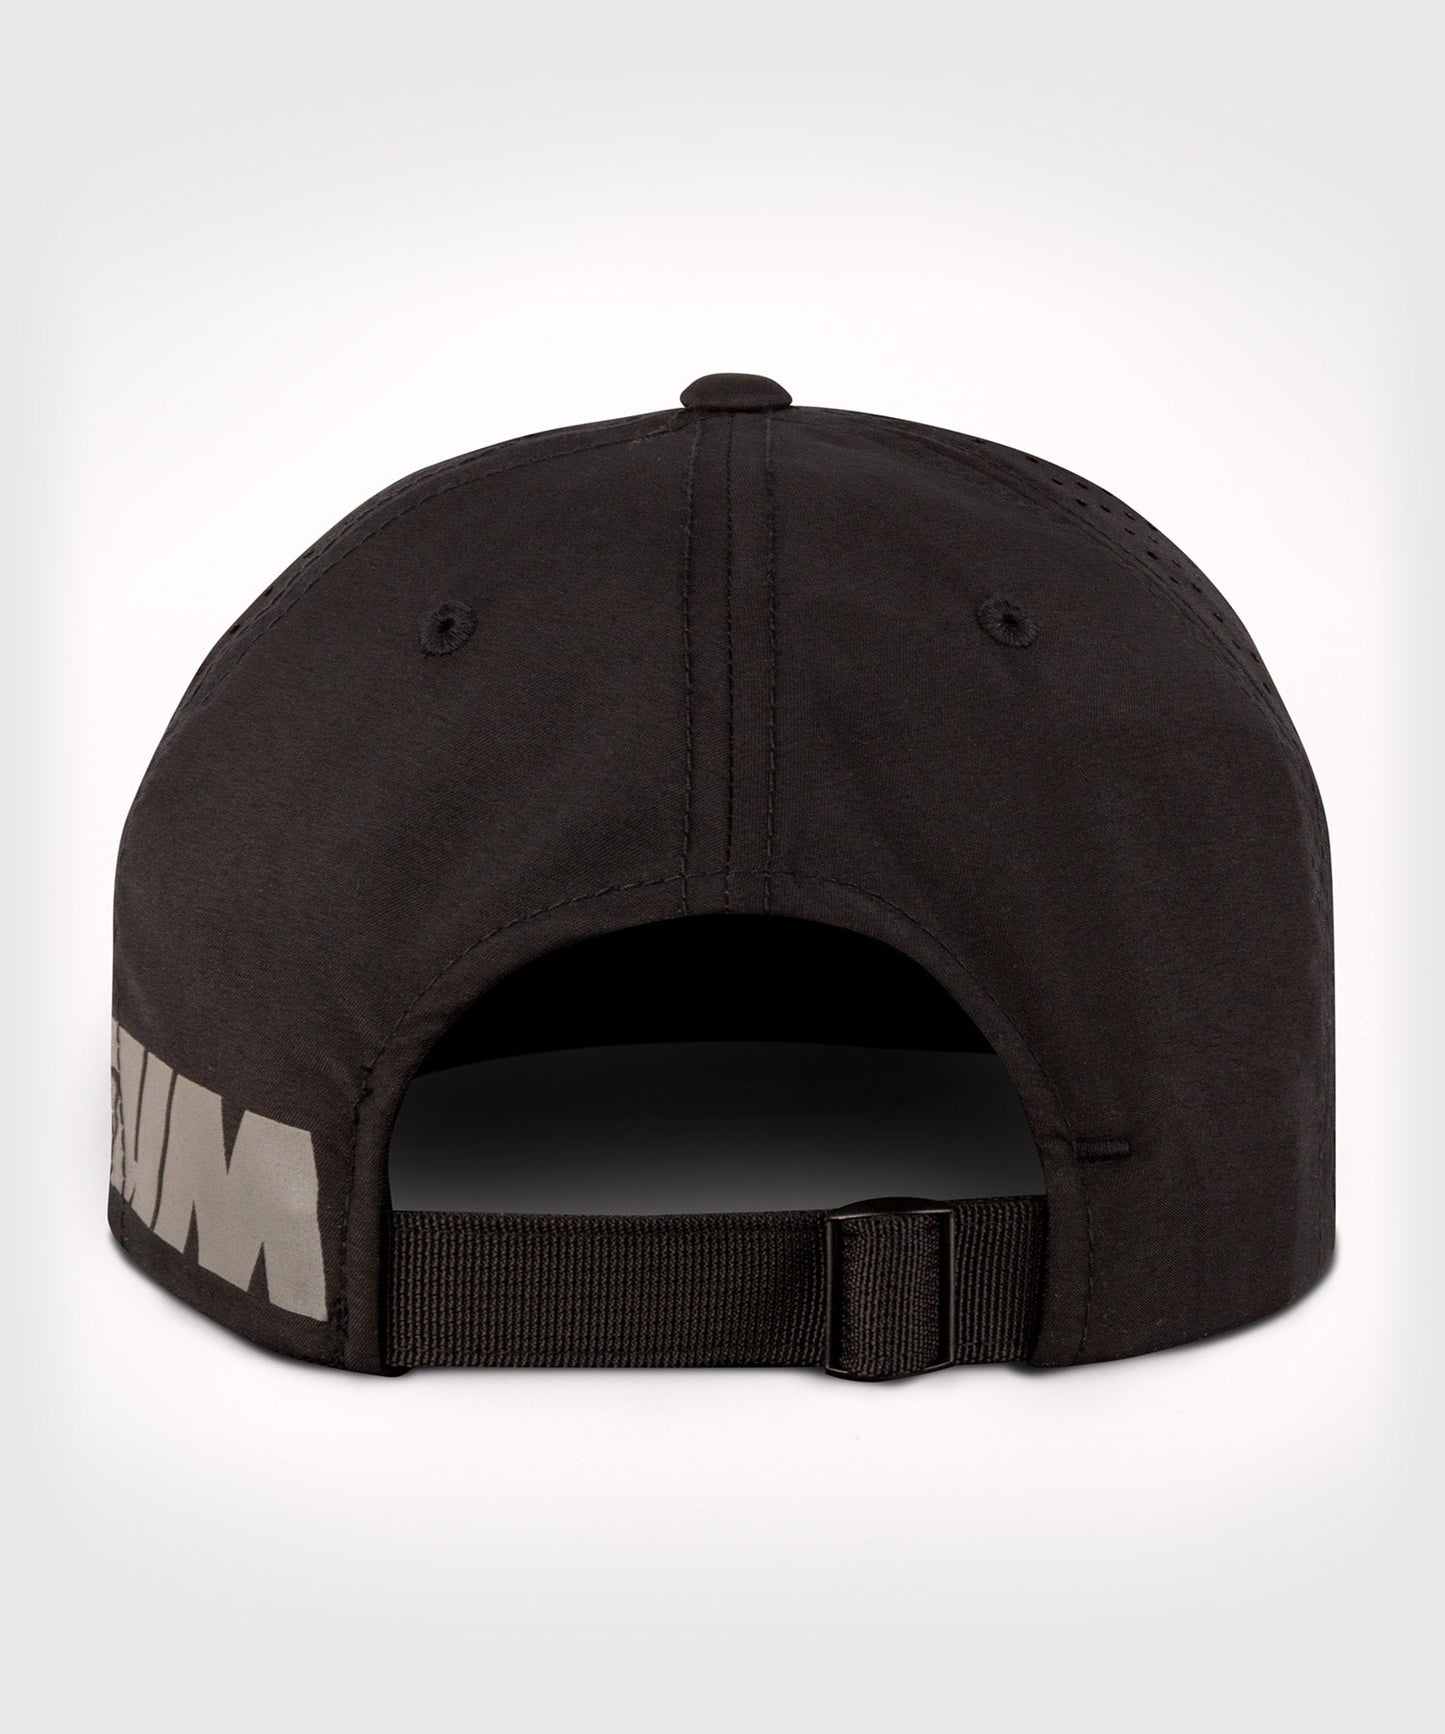 Venum Connect Hat - Black/Grey